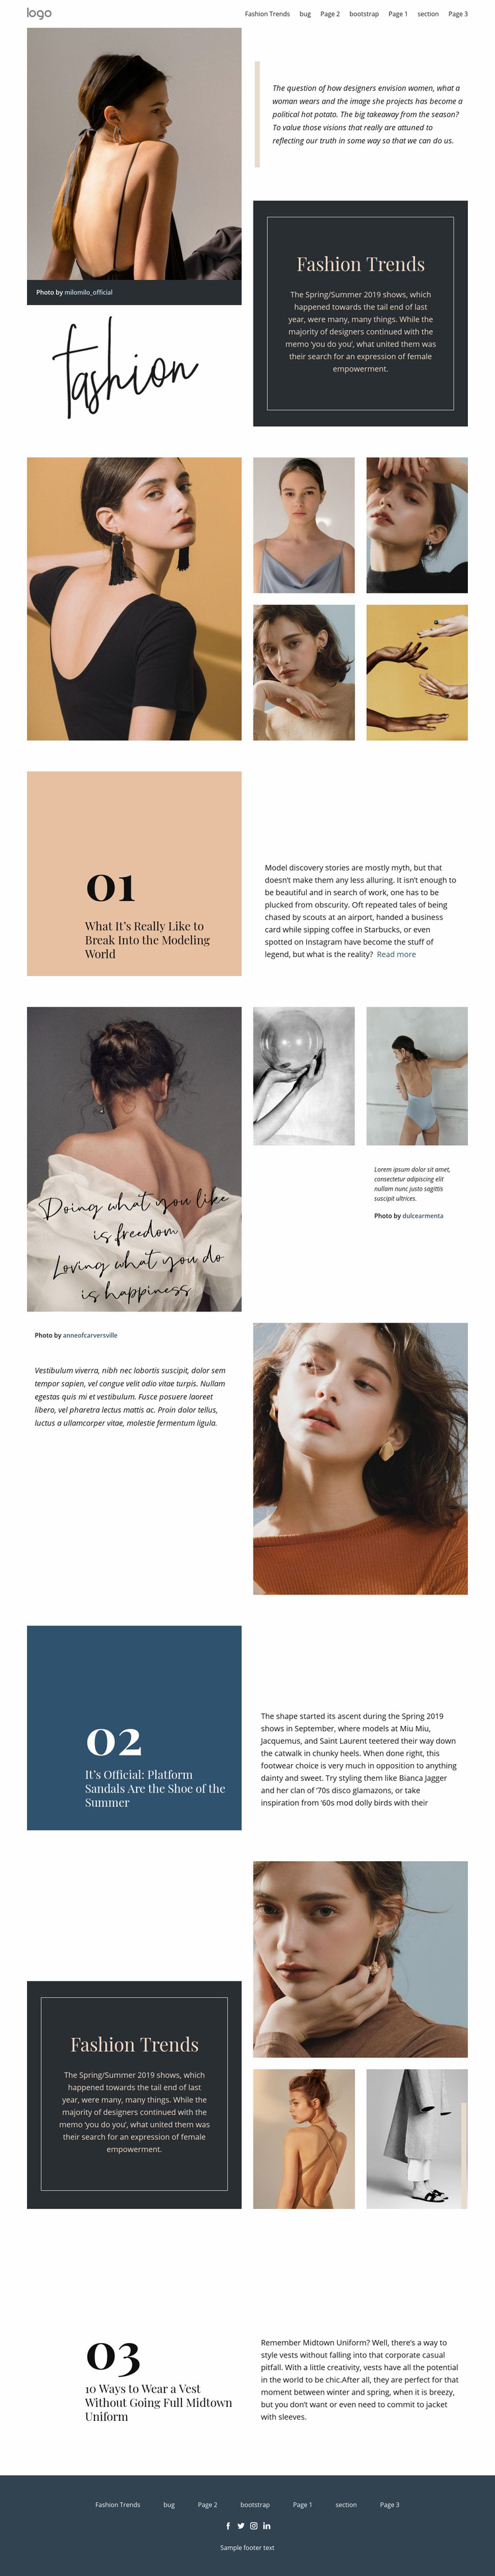 Designer vision of fashion Web Page Design